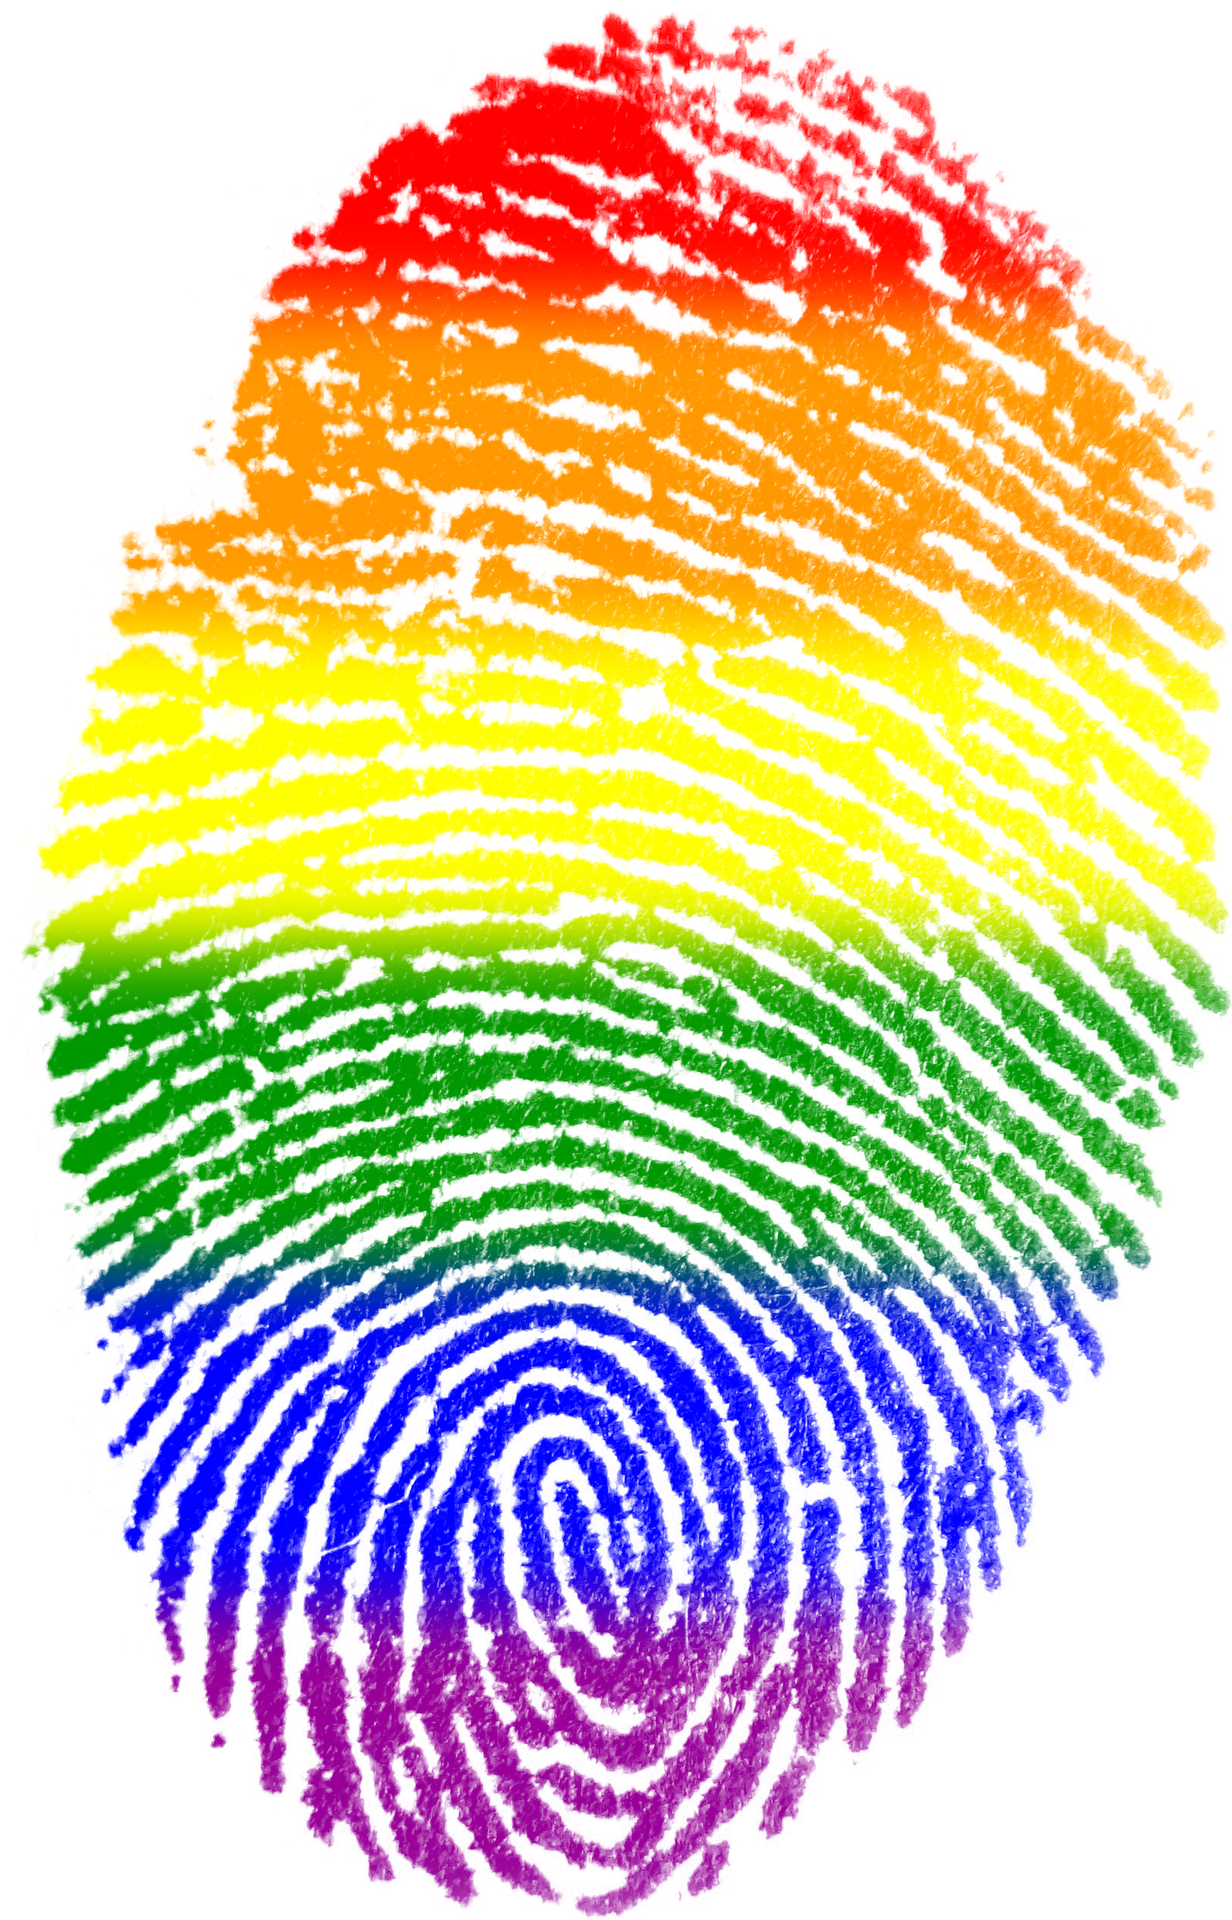 Fingerprint in rainbow colors